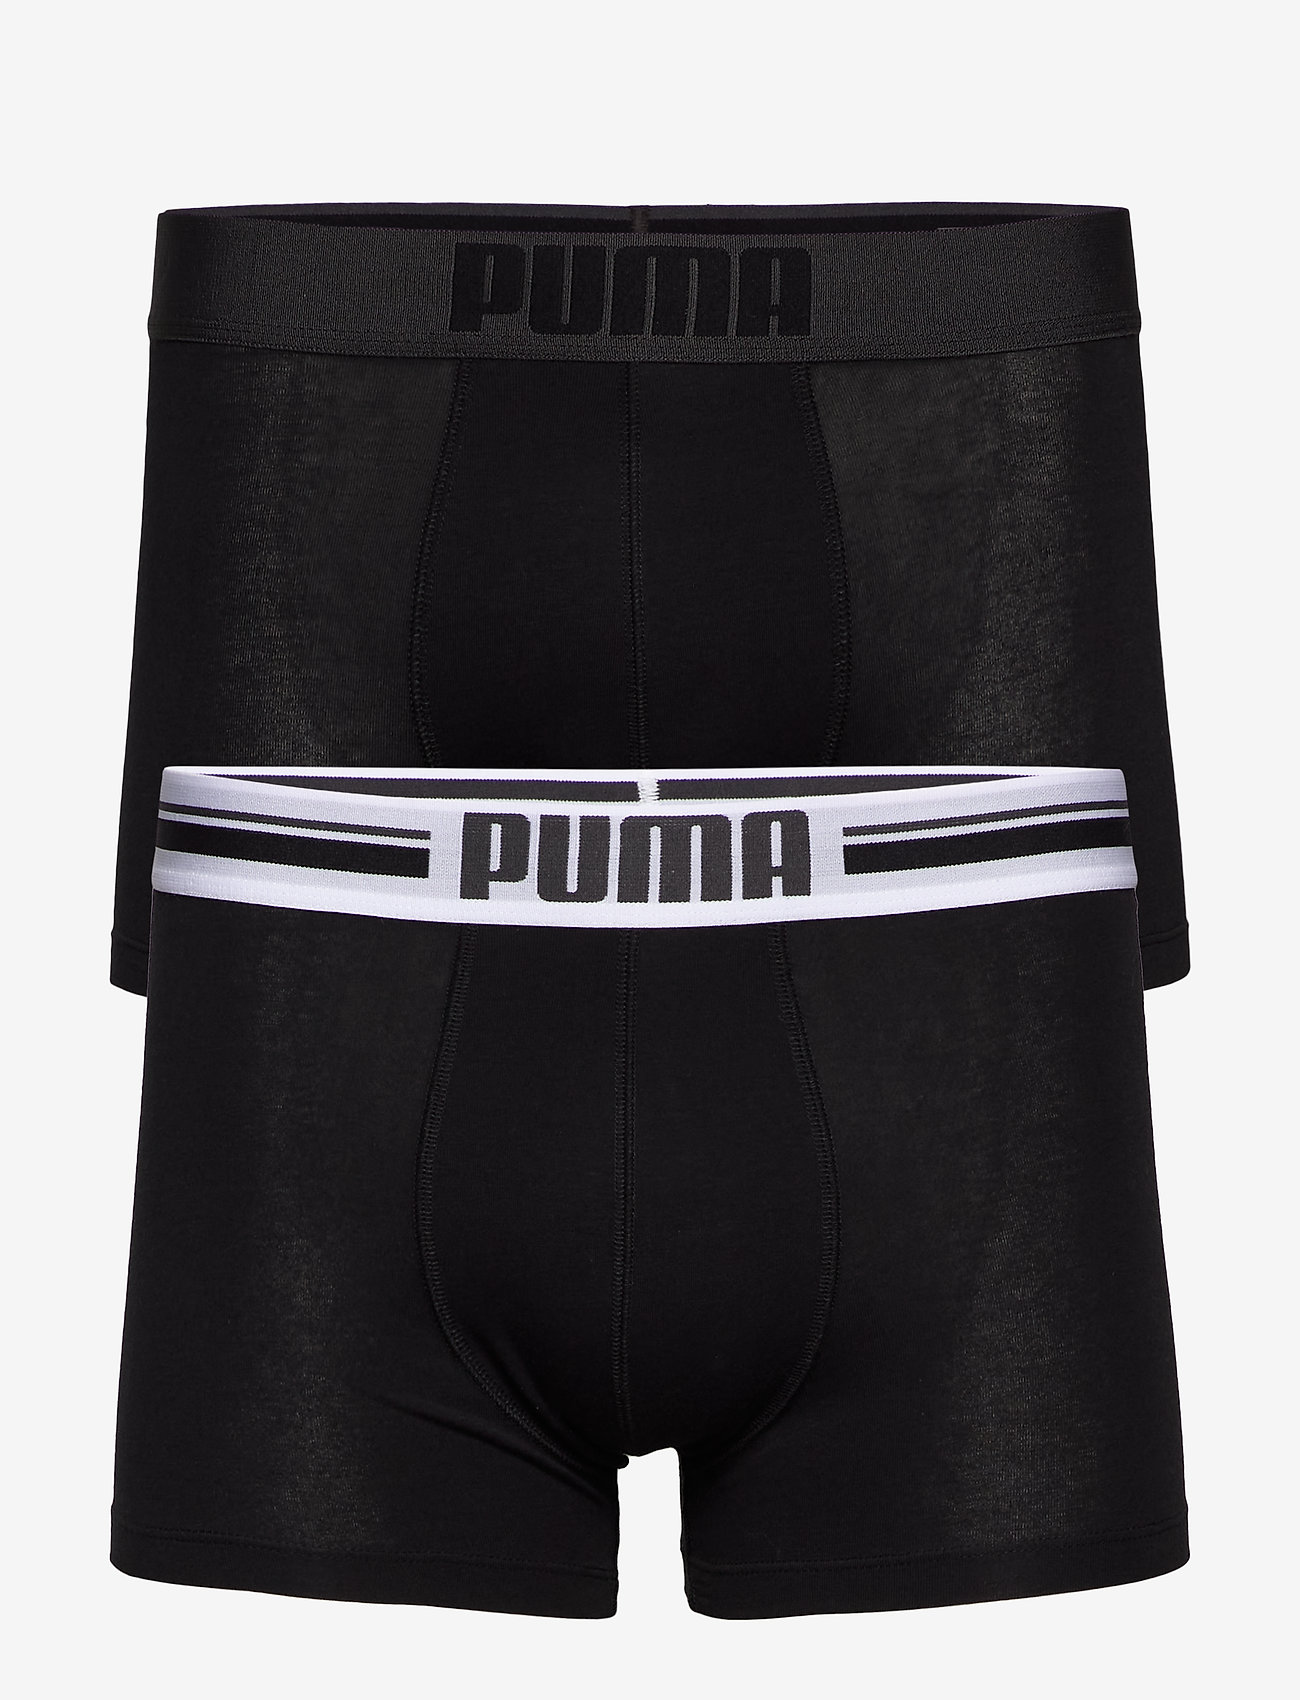 PUMA - PUMA PLACED LOGO BOXER 2P - boxershorts - black - 1